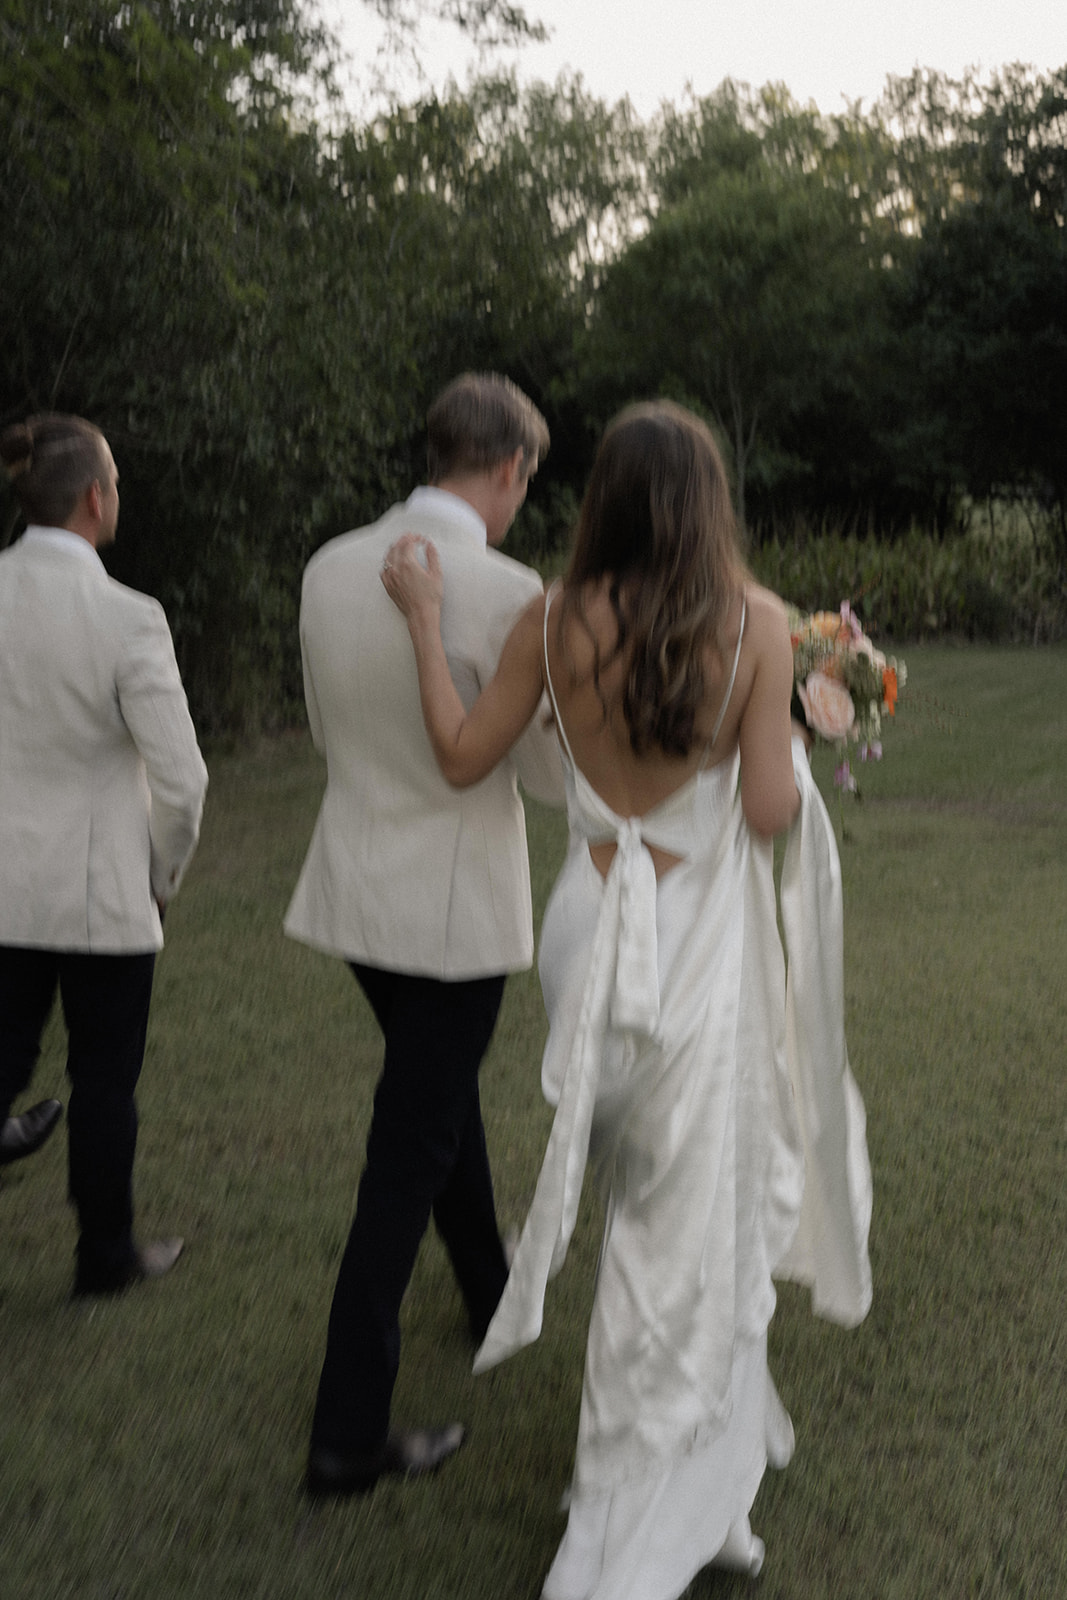 Brisbane editorial backyard wedding photography, candids of Couple 